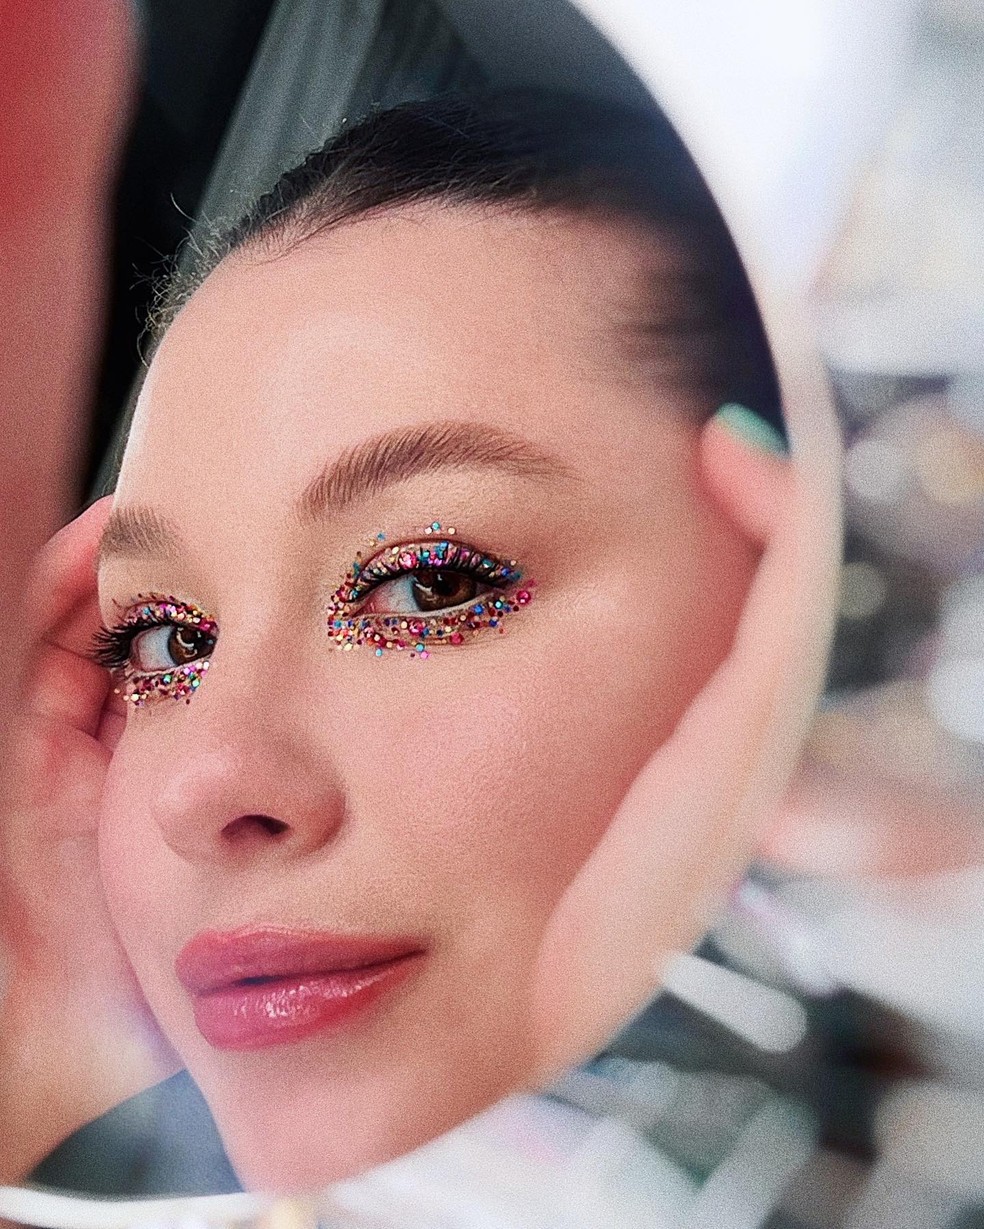 Maquiagem com glitter — Foto: Instagram @brigittecalegari